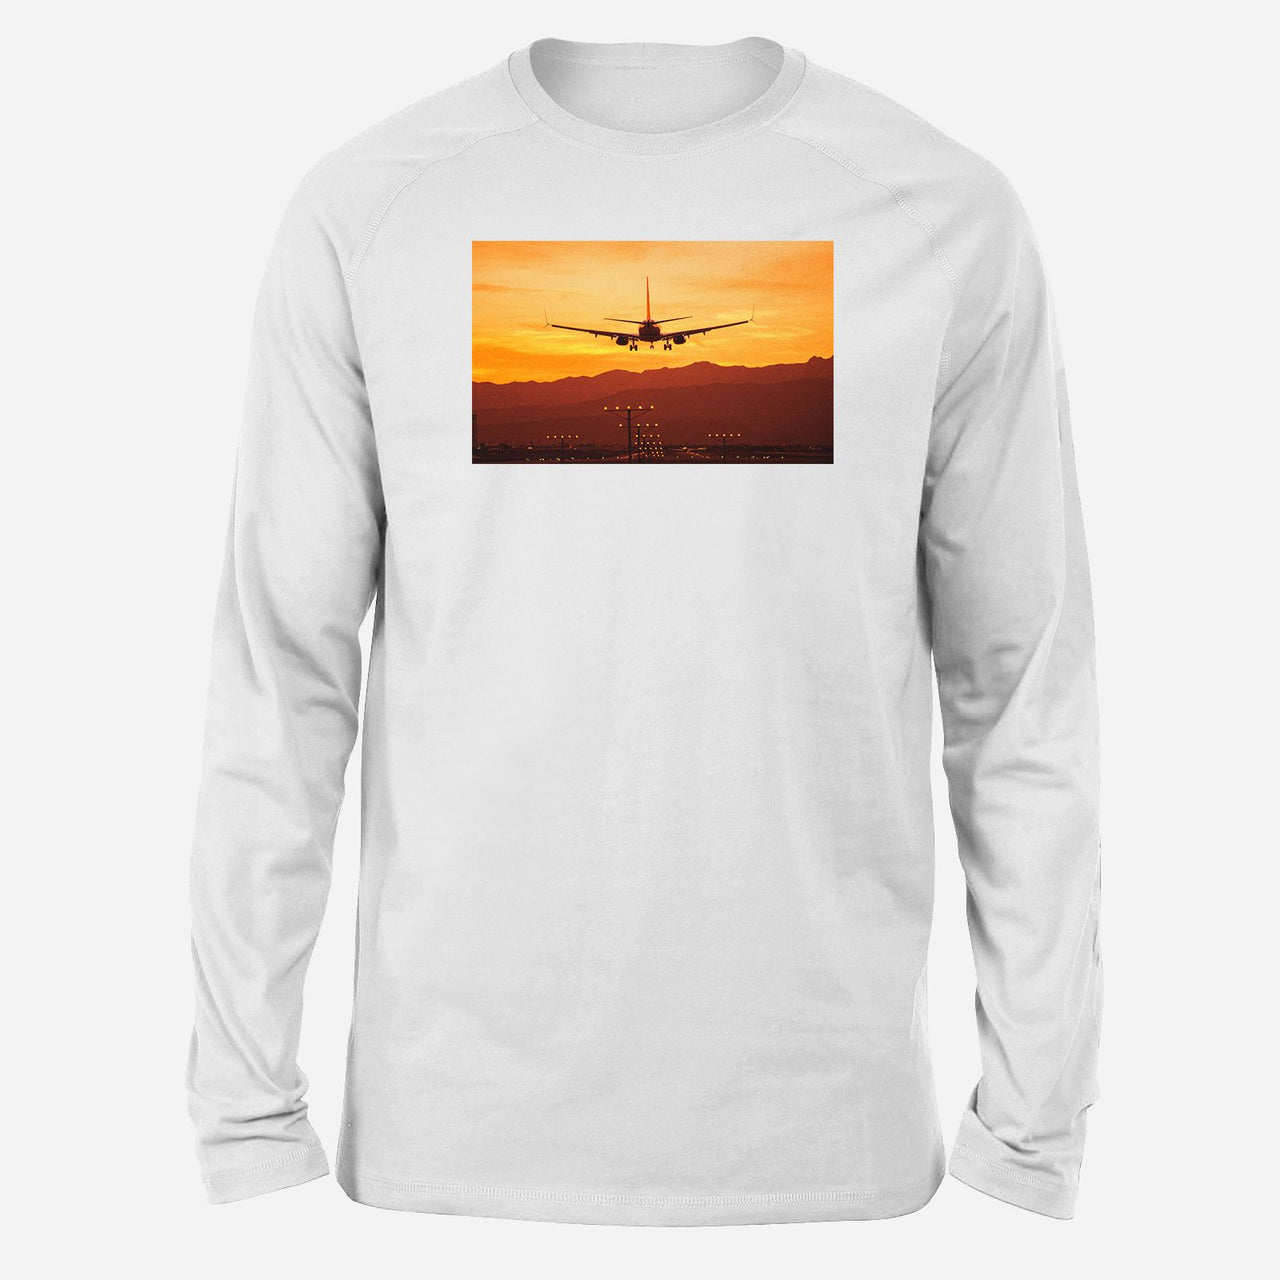 Landing Aircraft During Sunset Designed Long-Sleeve T-Shirts